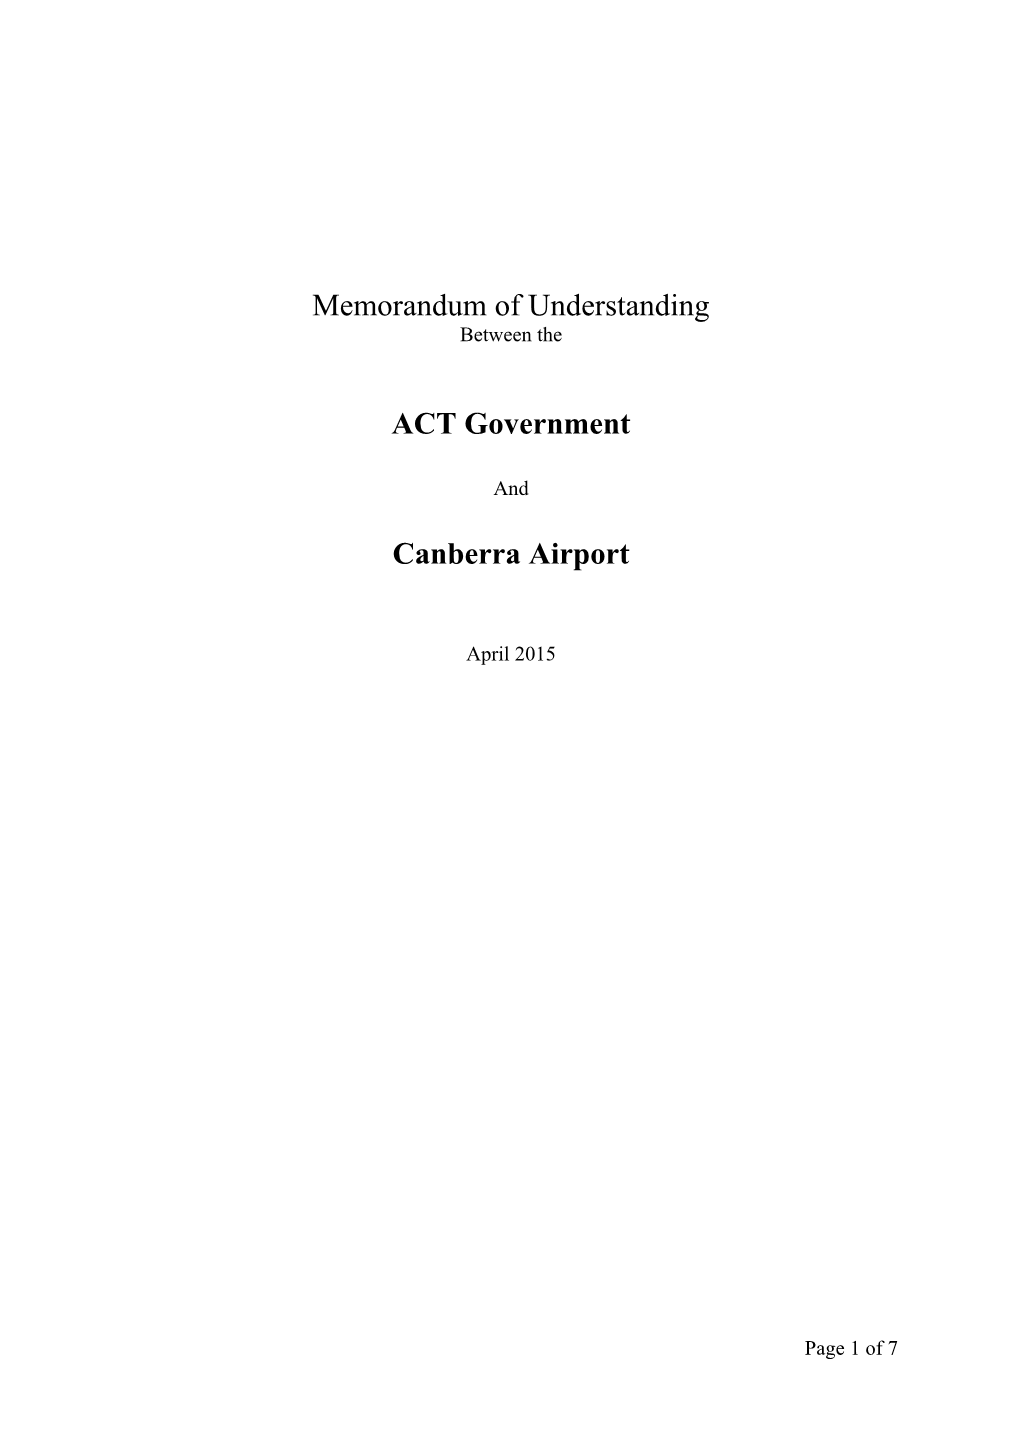 MOU Actgov Canberraairport April 2015